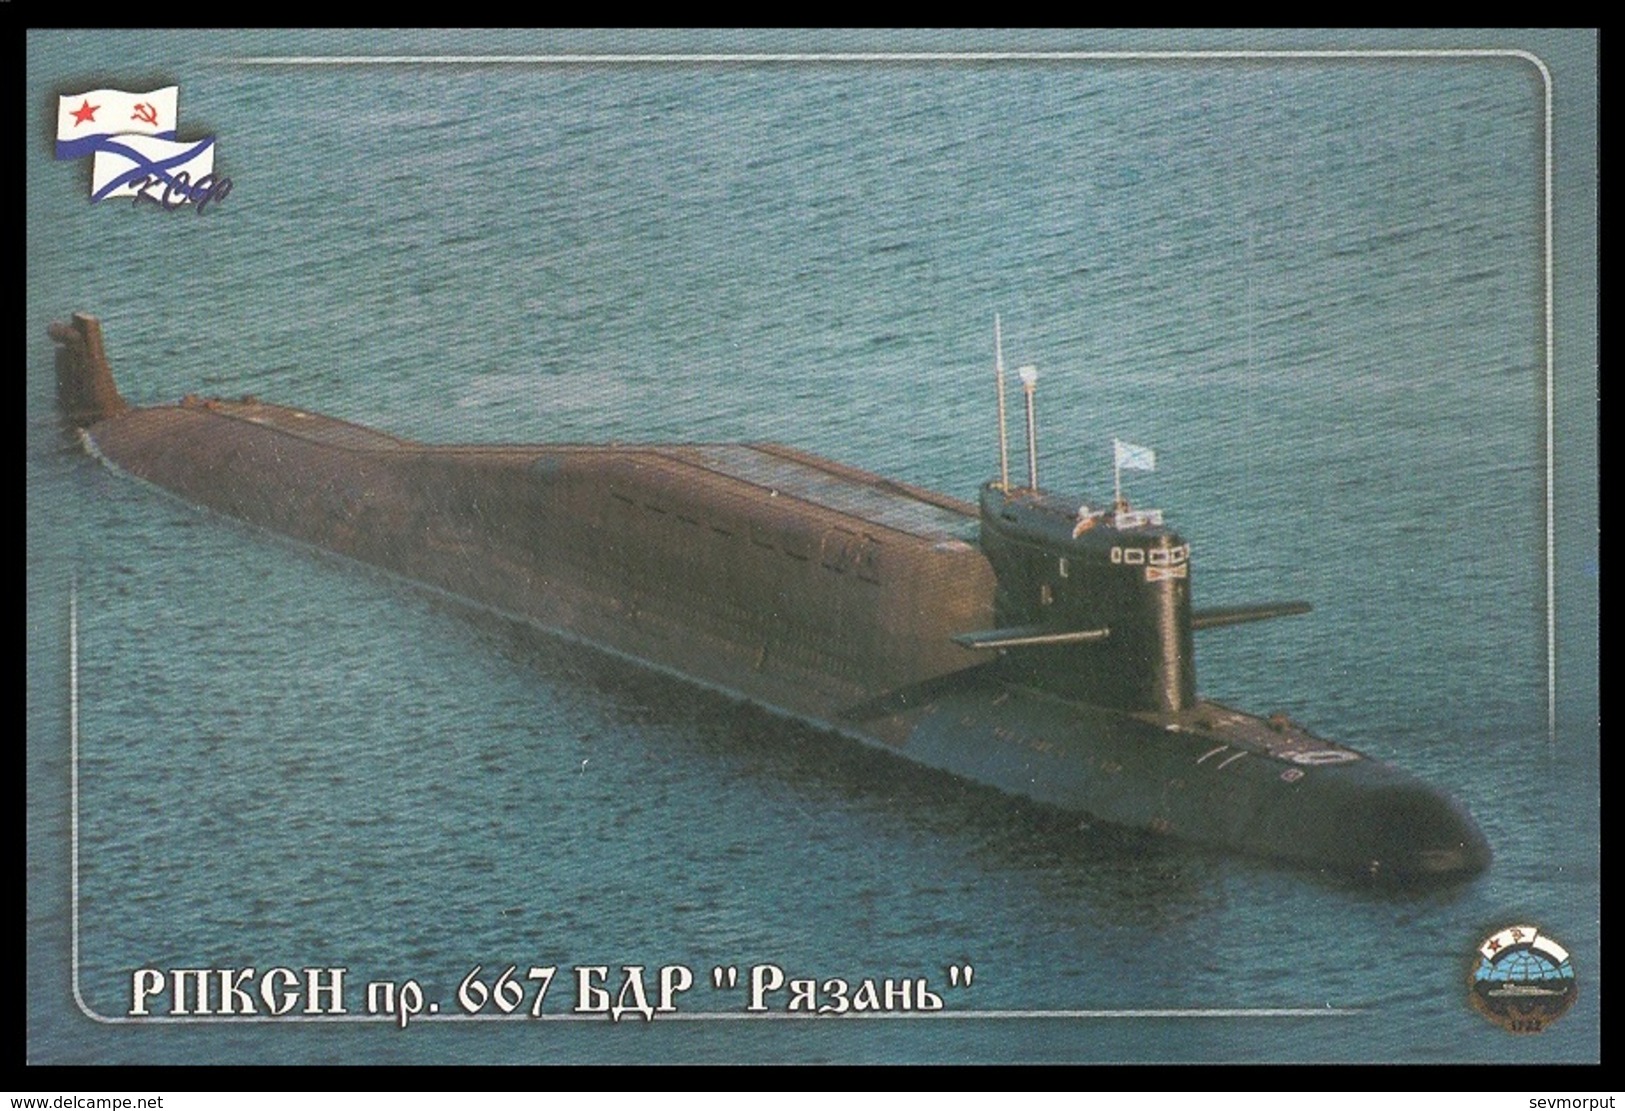 RUSSIA 2015 POSTCARD 3665 Used Fdc MARINESKO SUBMARINE 667 "RYAZAN" NUCLEAR ATOM SOUS MARIN U BOOT ARCTIC NORD Mailed - U-Boote